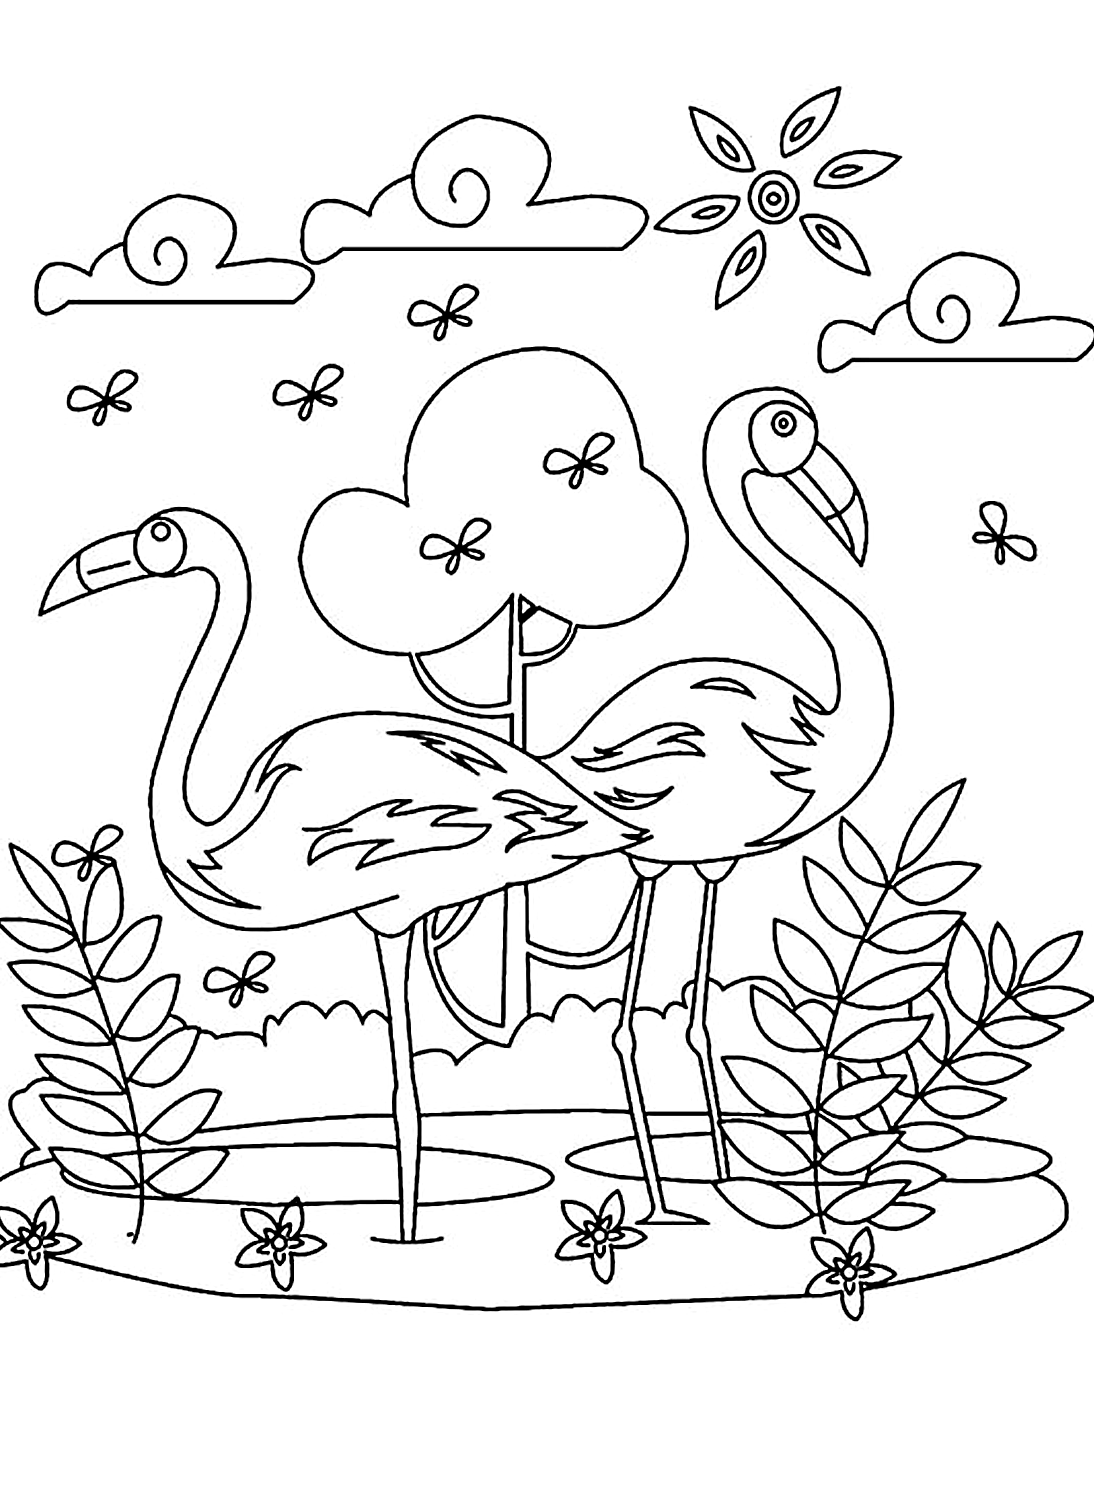 Malblatt Flamingo von Flamingo